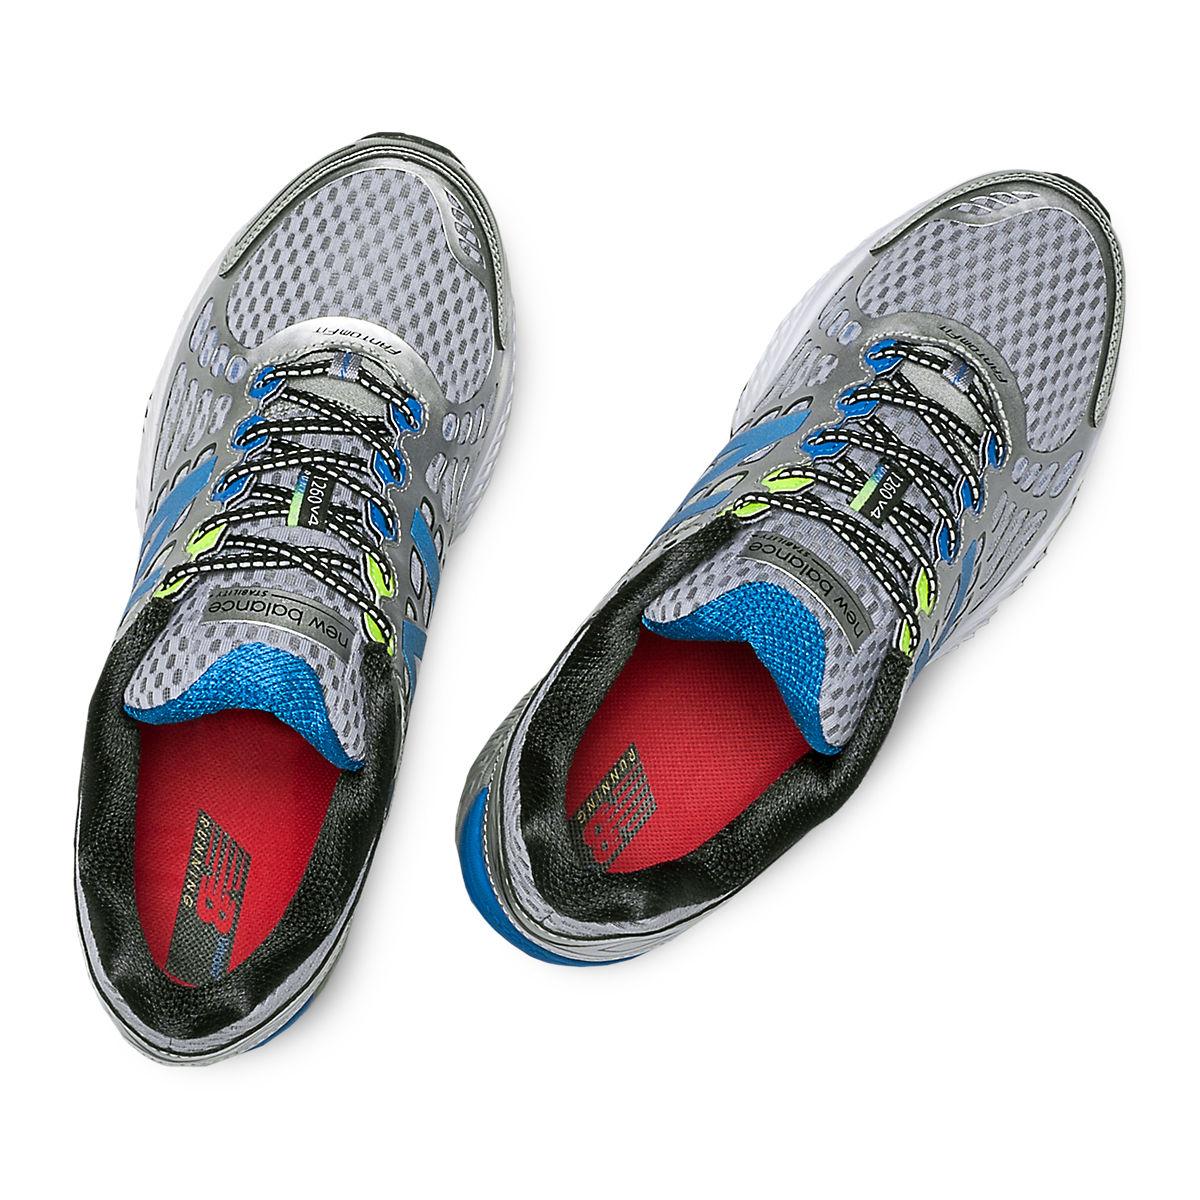 New Balance M1260v4 Mens Running Shoes - Silver/Blue -